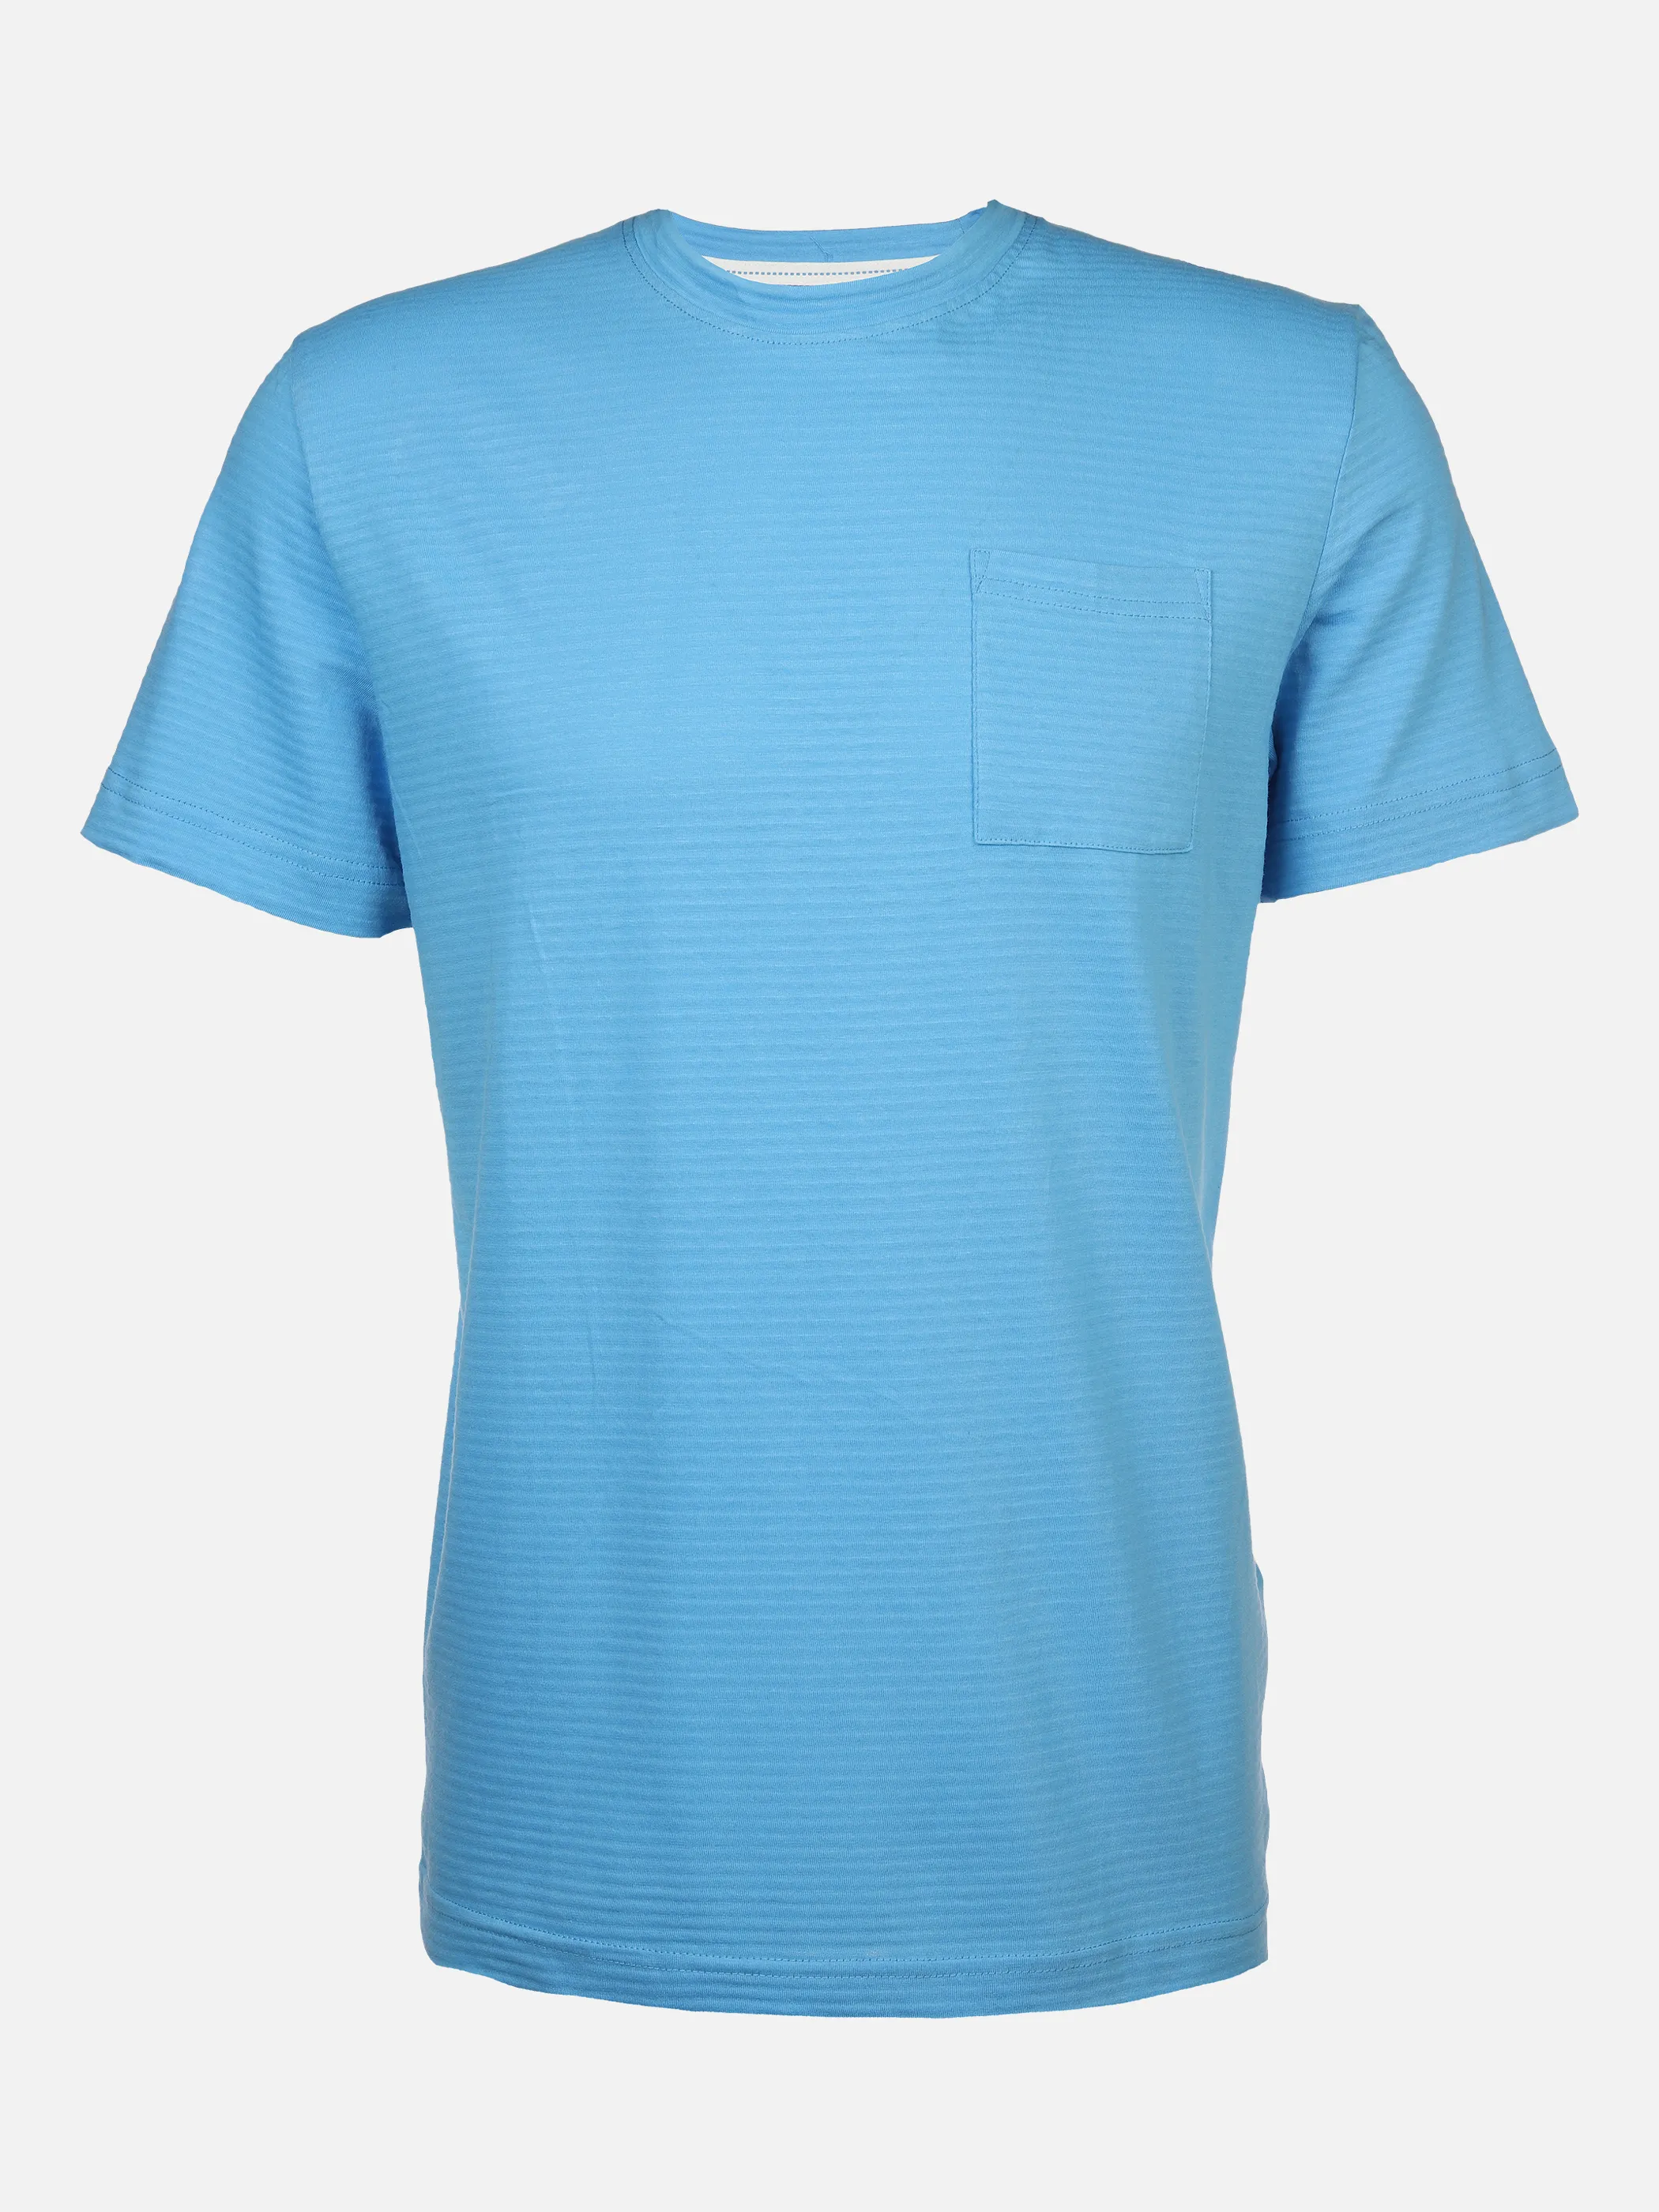 Tom Tailor 1036319 basic t-shirt with pocket Blau 880551 18395 1